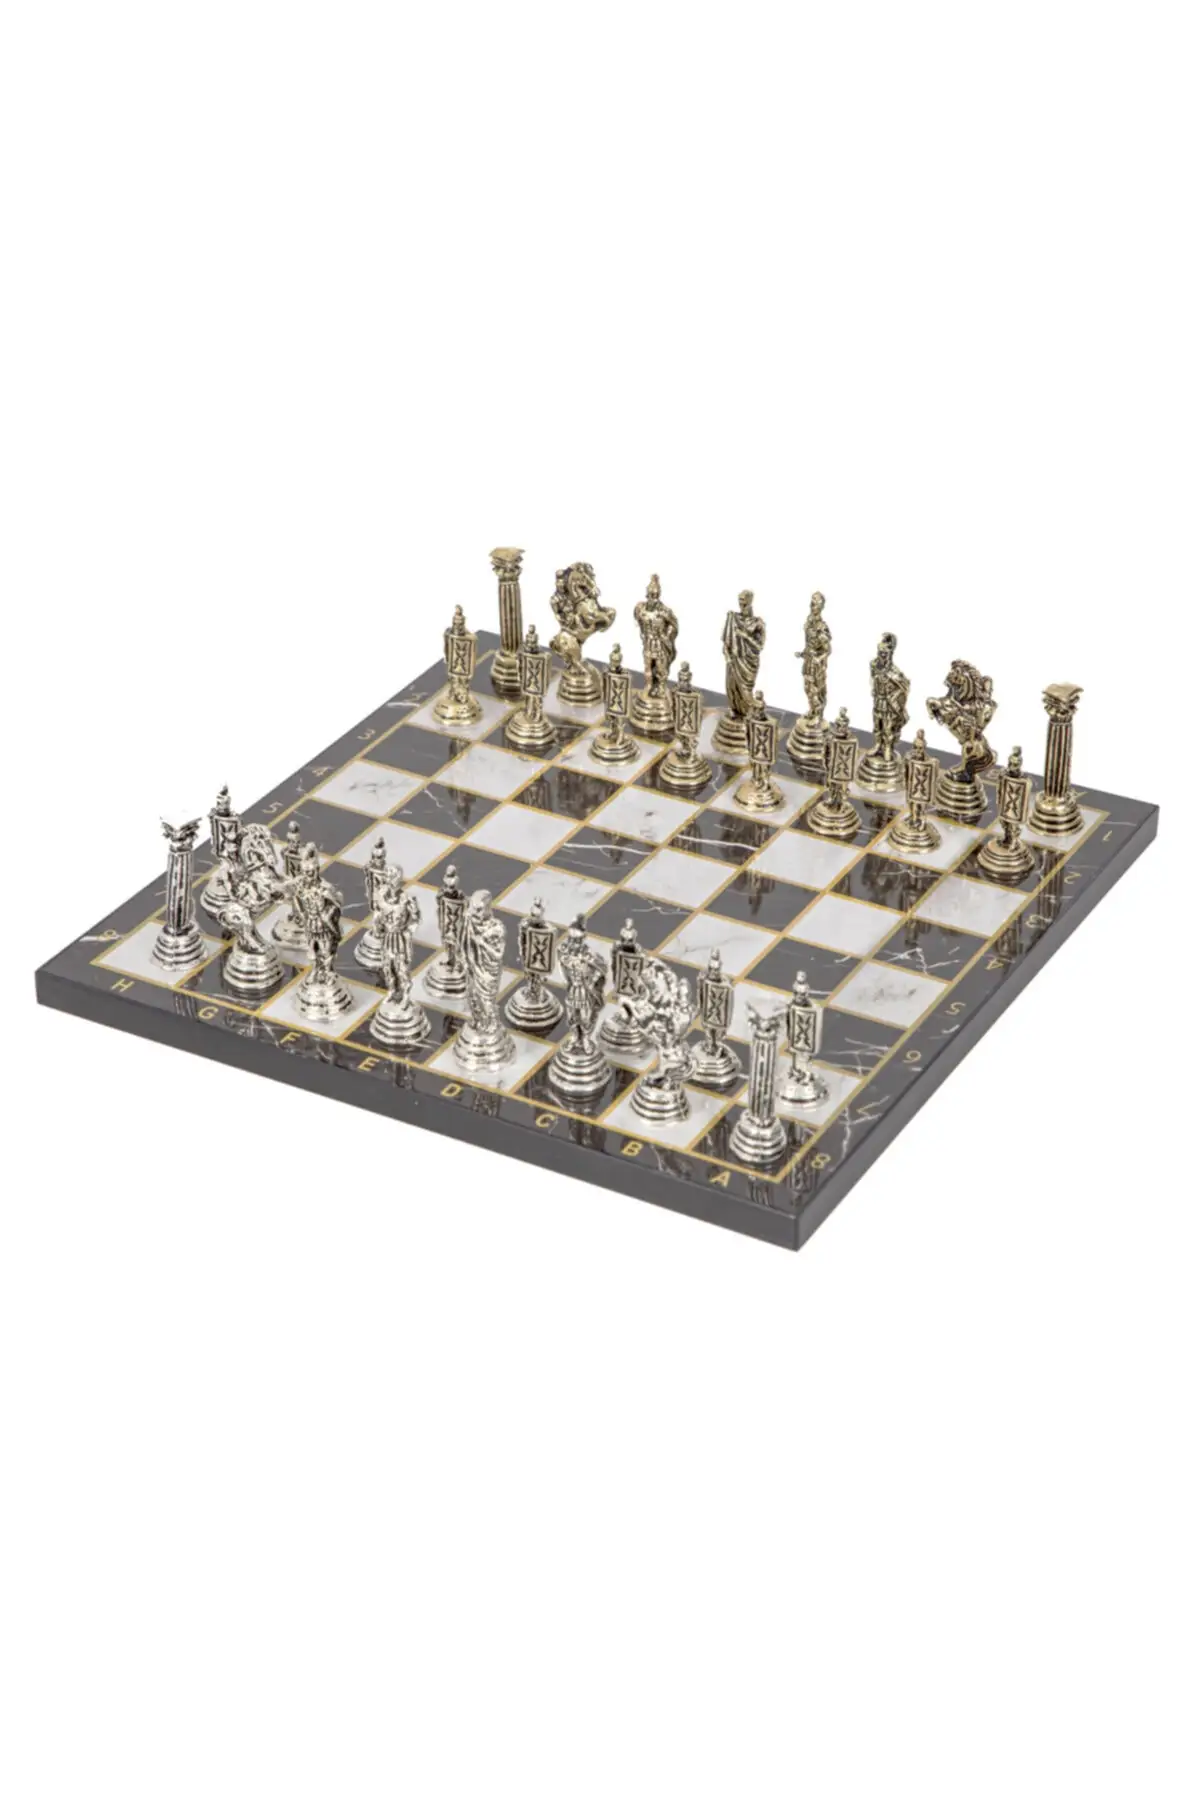 

ESRMK3 Luxury Metal Chess Set Chrome Plated Roman Soldiers & Black Marble Pattern Board